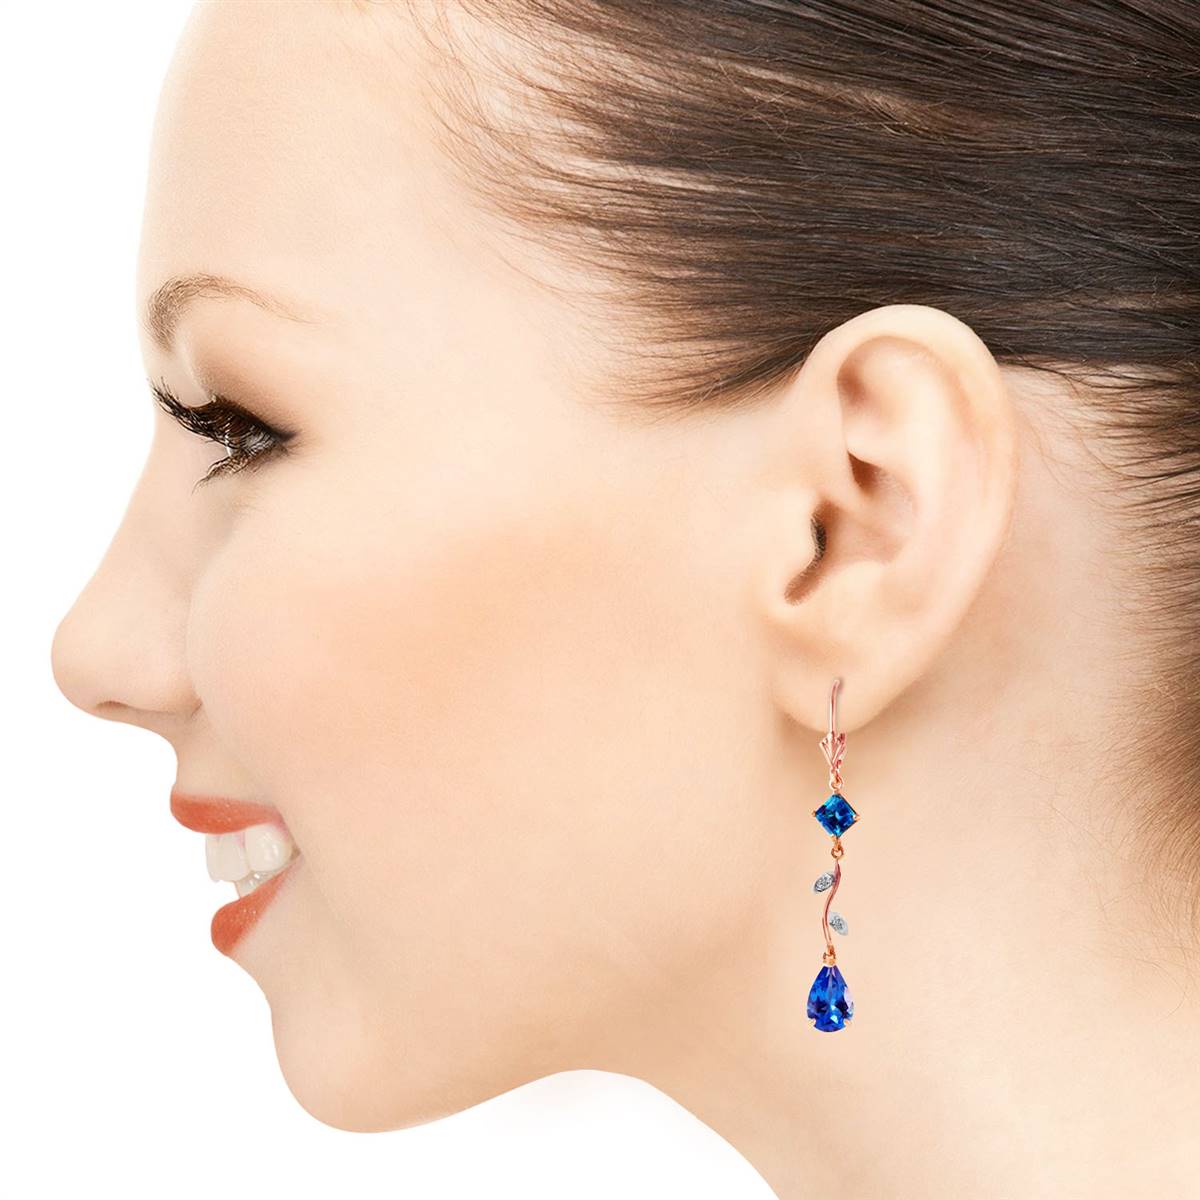 3.97 Carat 14K Solid Rose Gold Chandelier Earrings Natural Diamond Blue Topaz